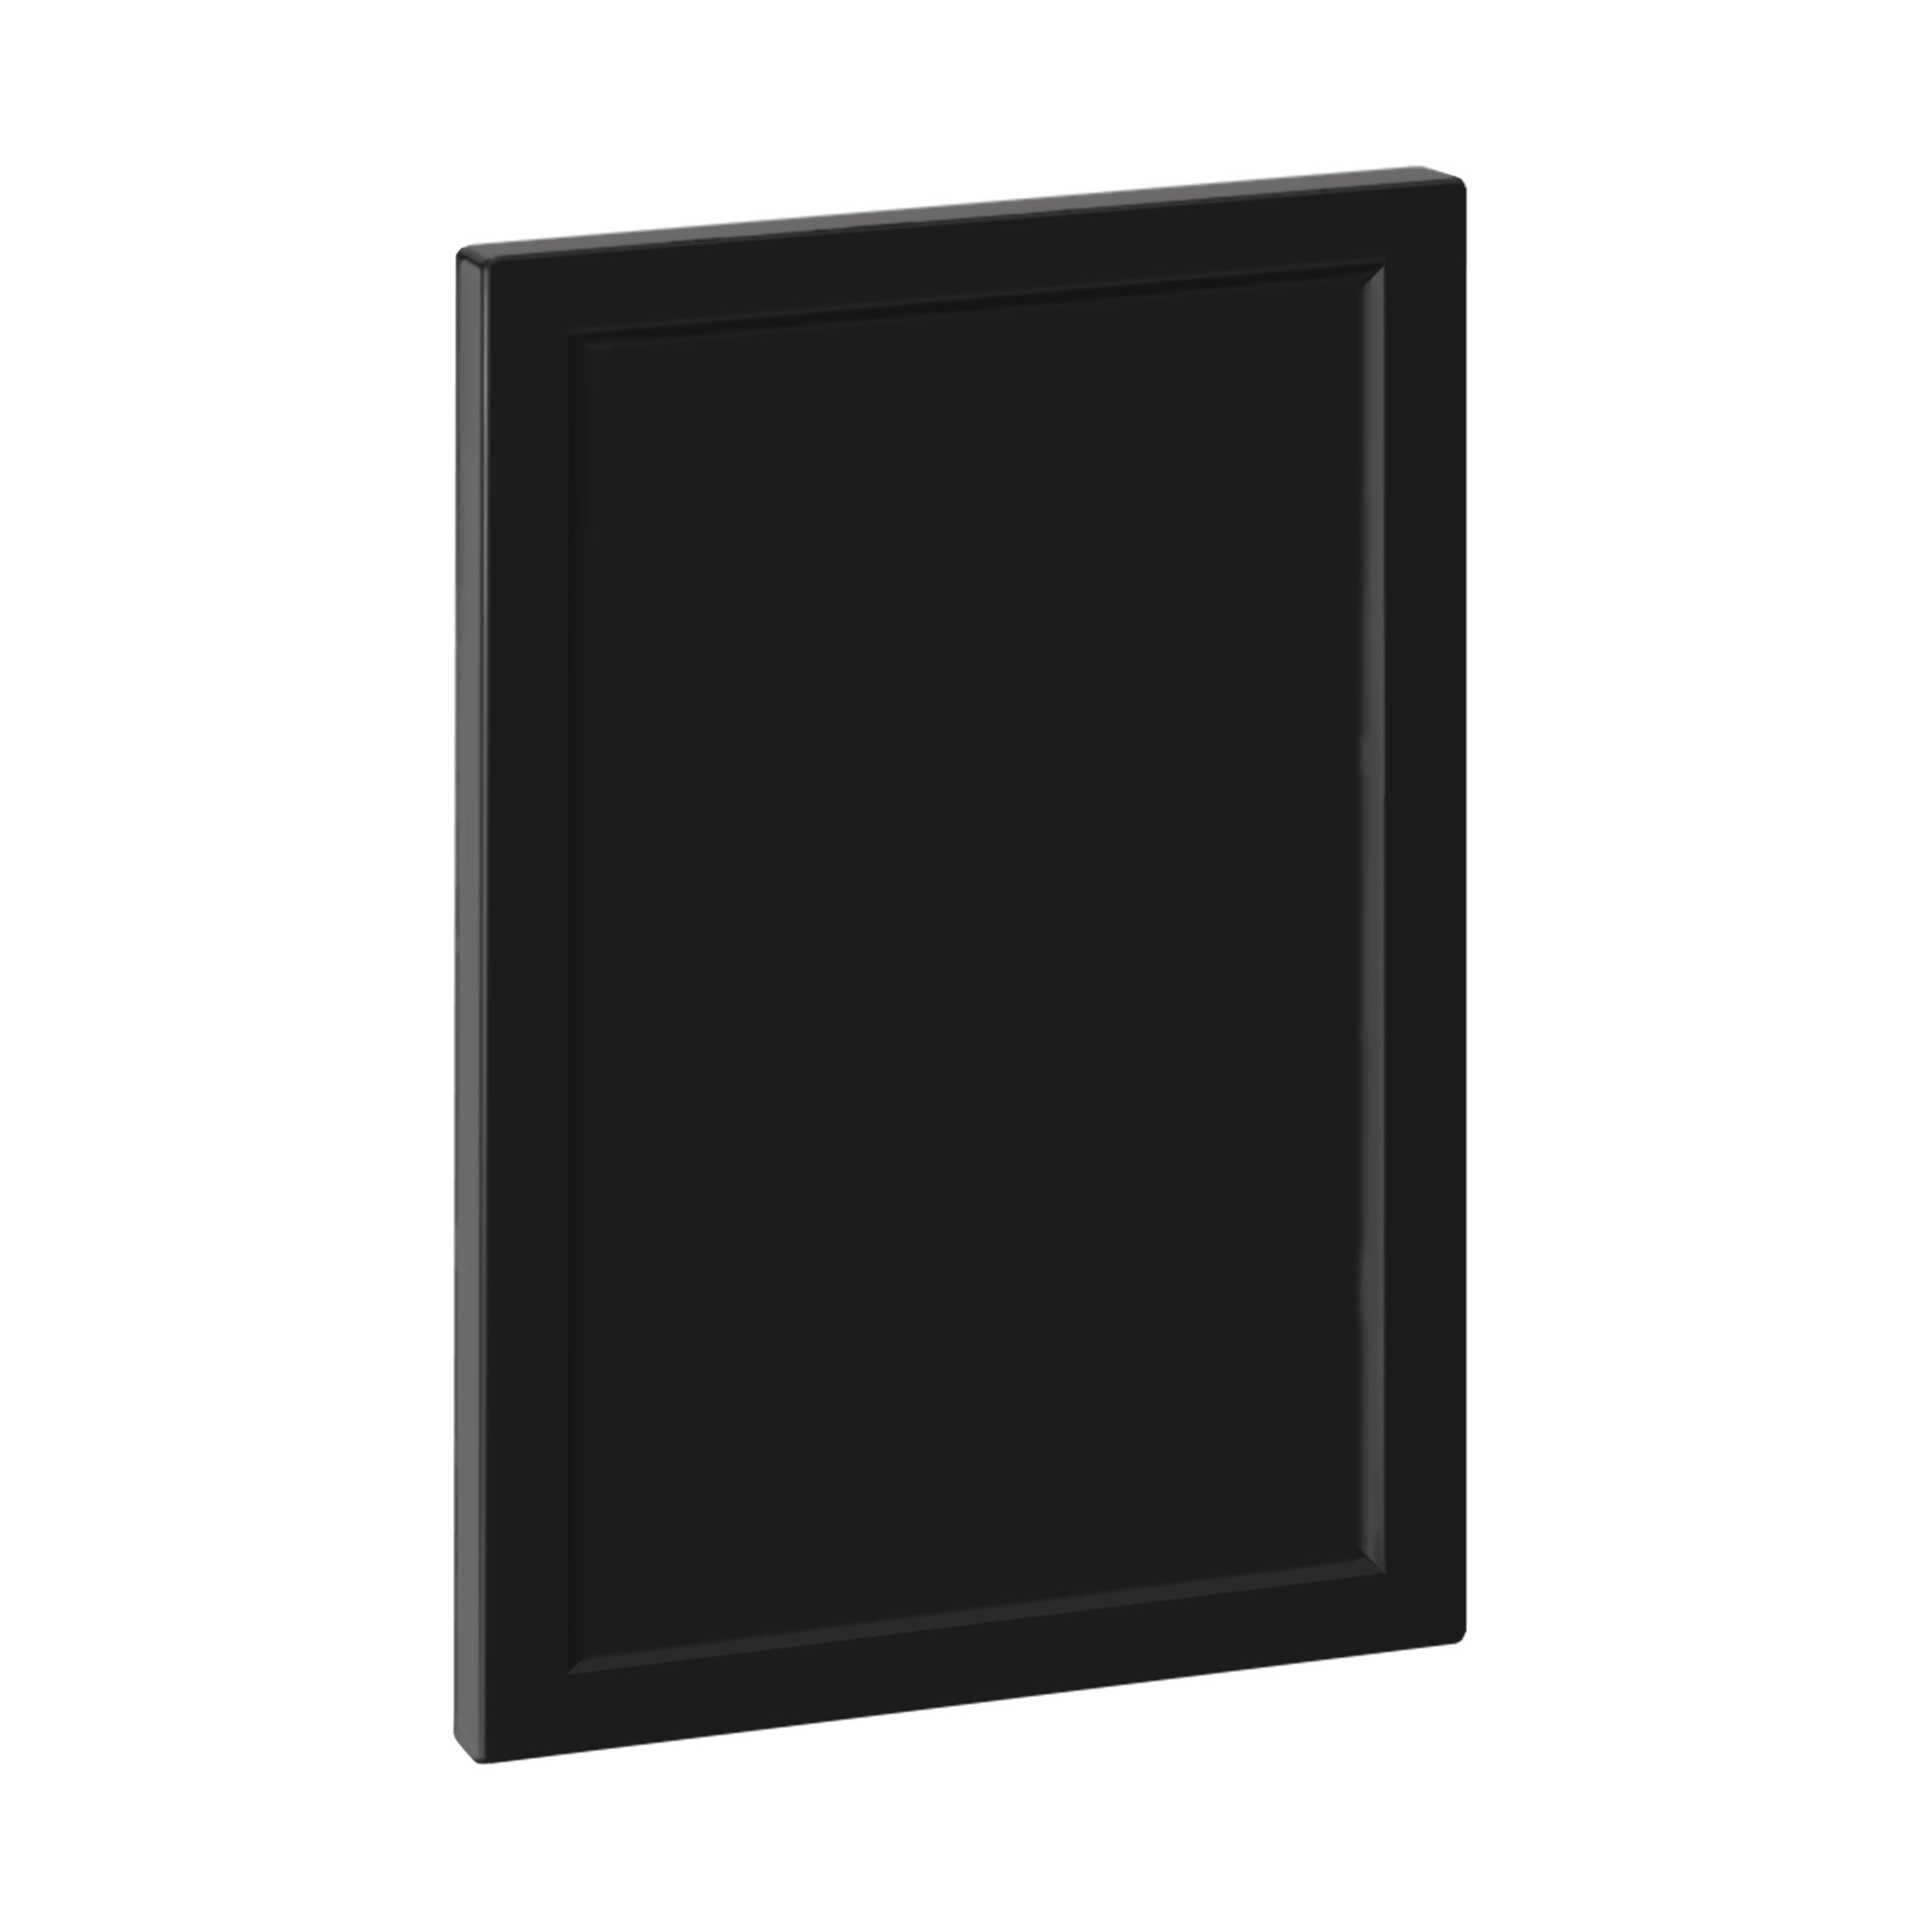 8" x 12" Cabinet Door Sample SSS Quarterline / Black